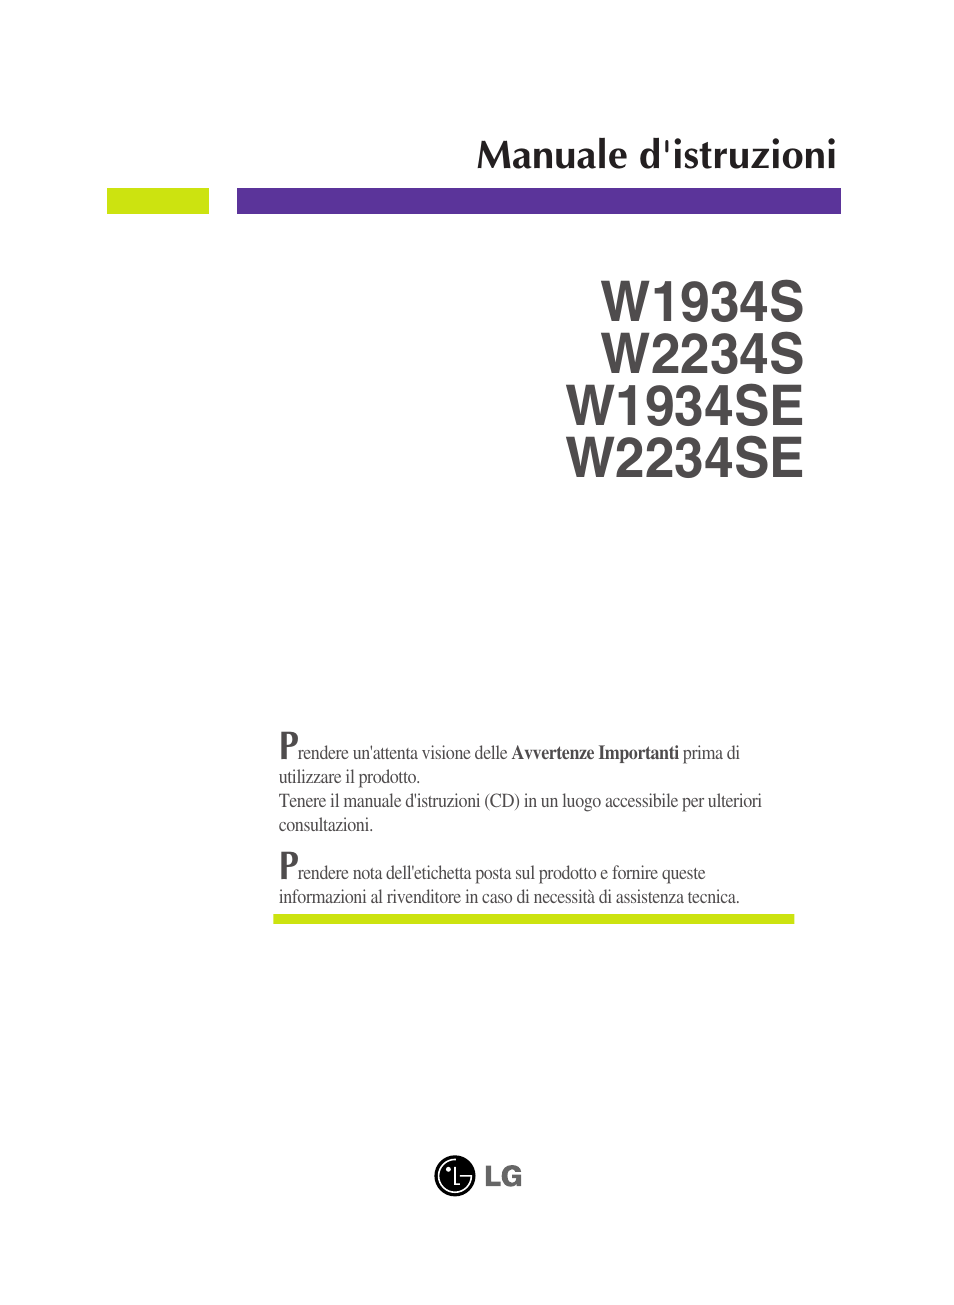 LG W2234S-BN Manuale d'uso | Pagine: 27